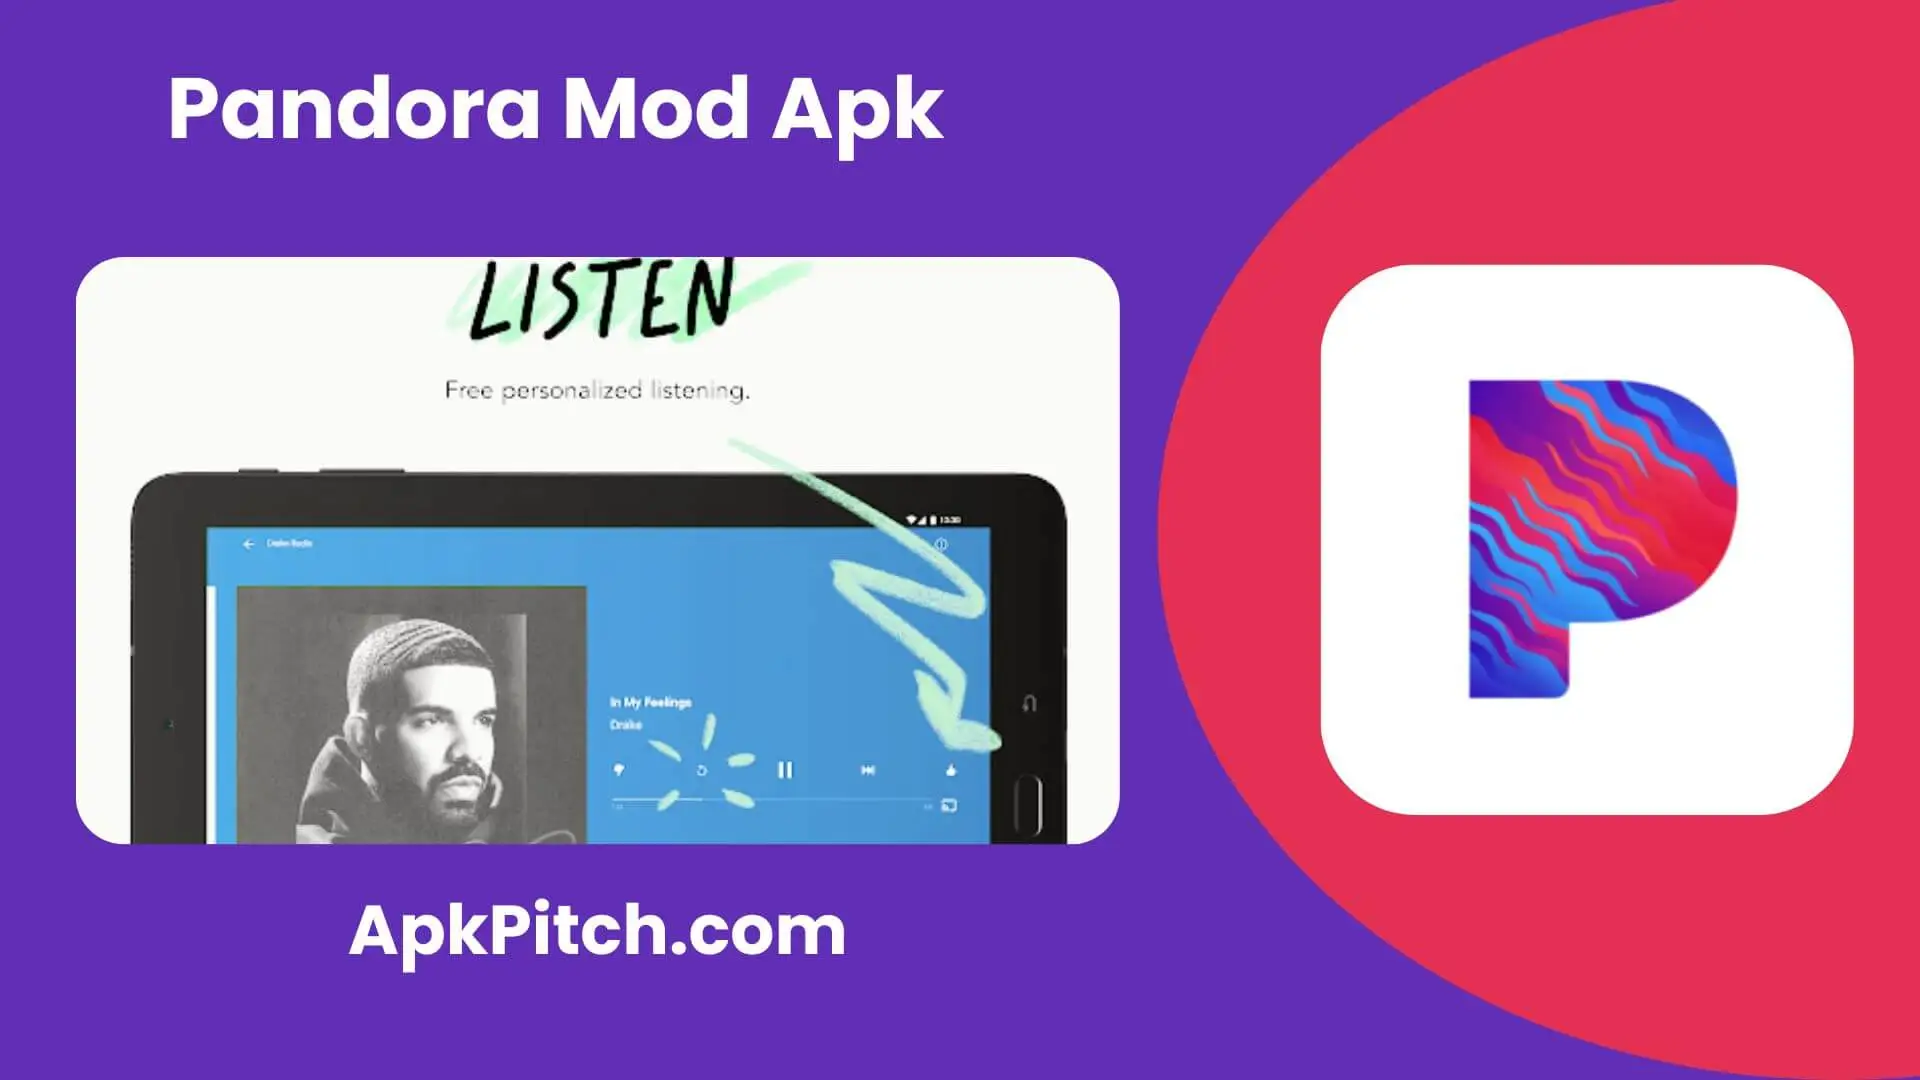 Pandora Mod Apk Free download